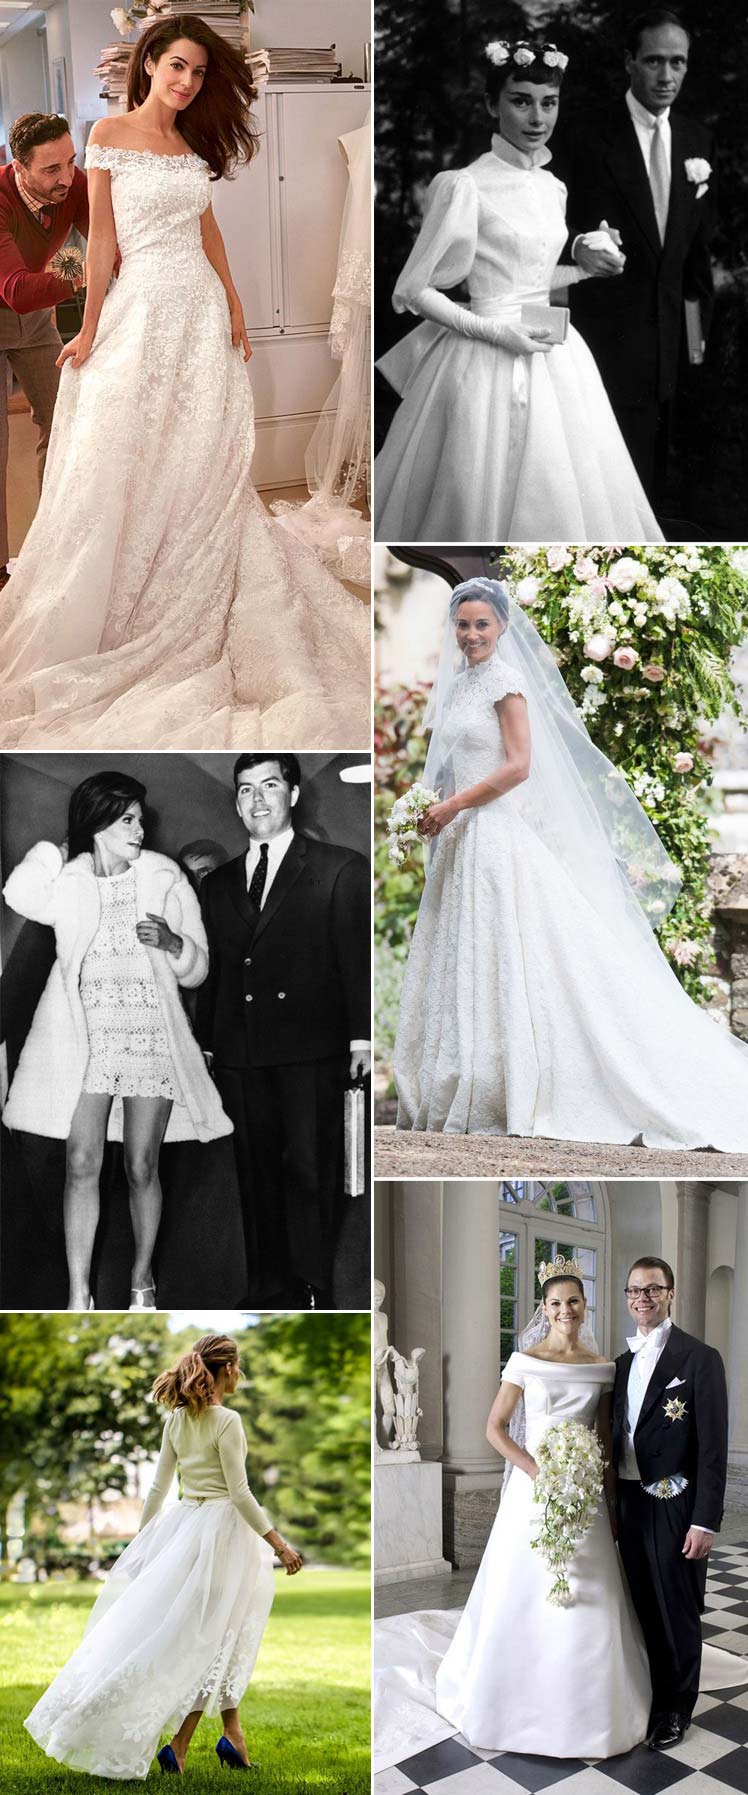 The most classic wedding dress ideas